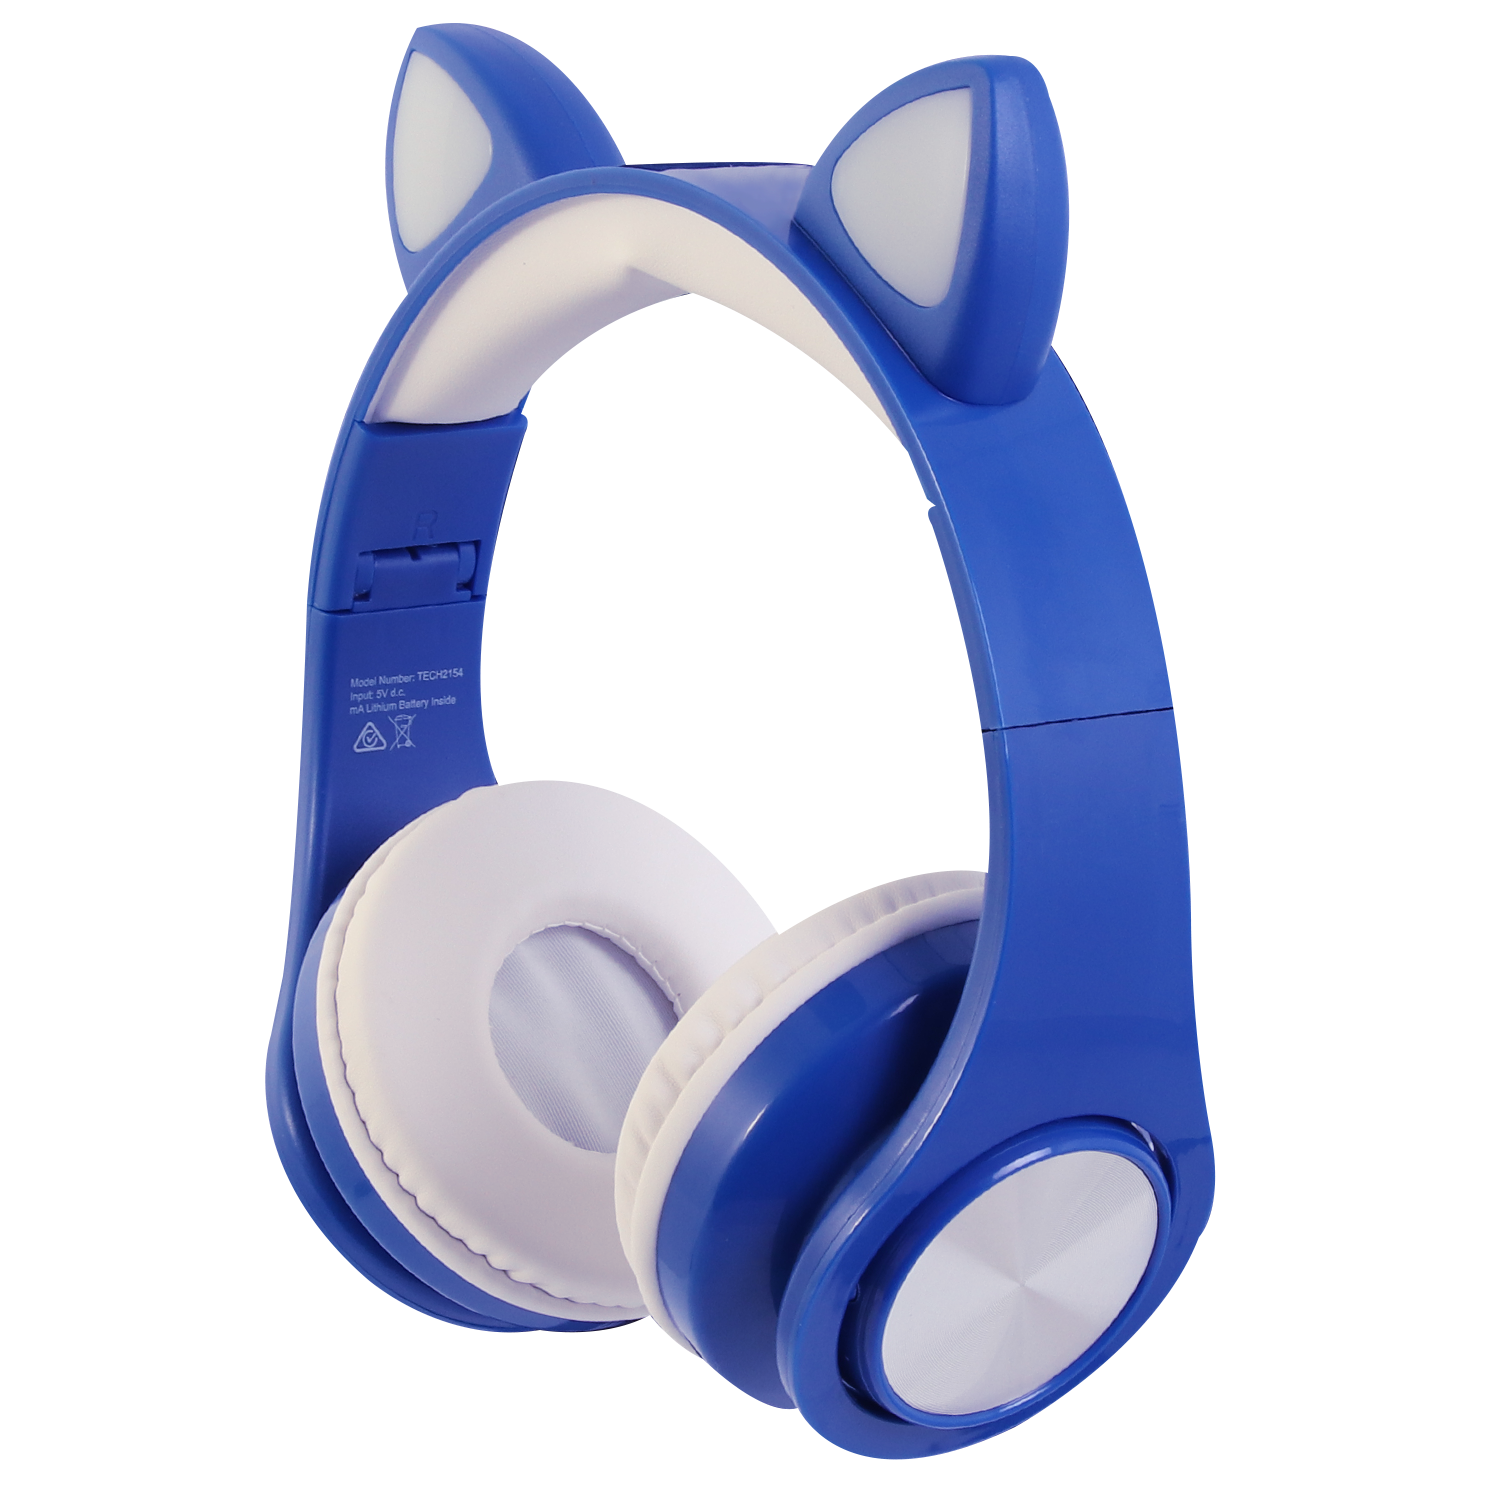 TechXtras Bluetooth Cat Ears Headphones - Blue